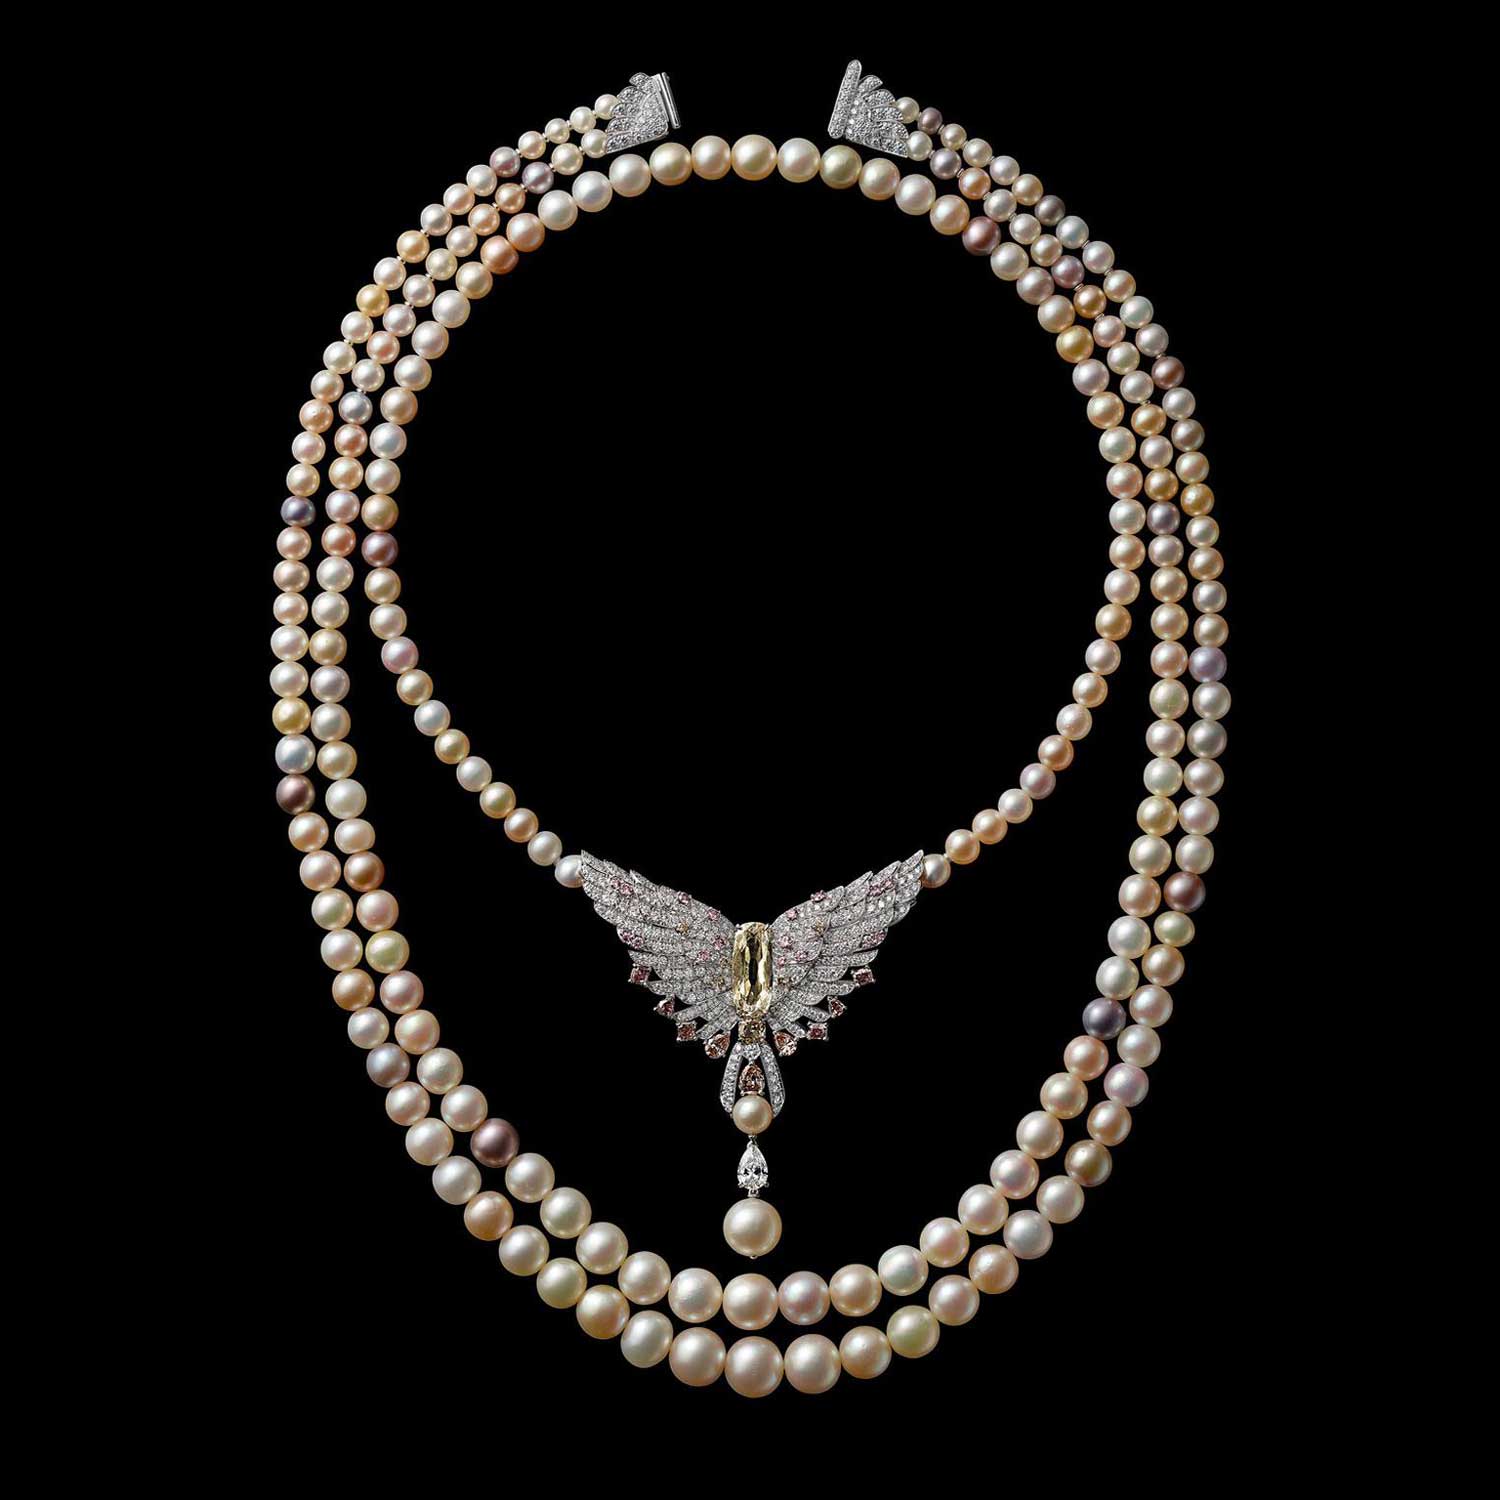 Maisie Plant’s pearl necklace (image: Cartier)